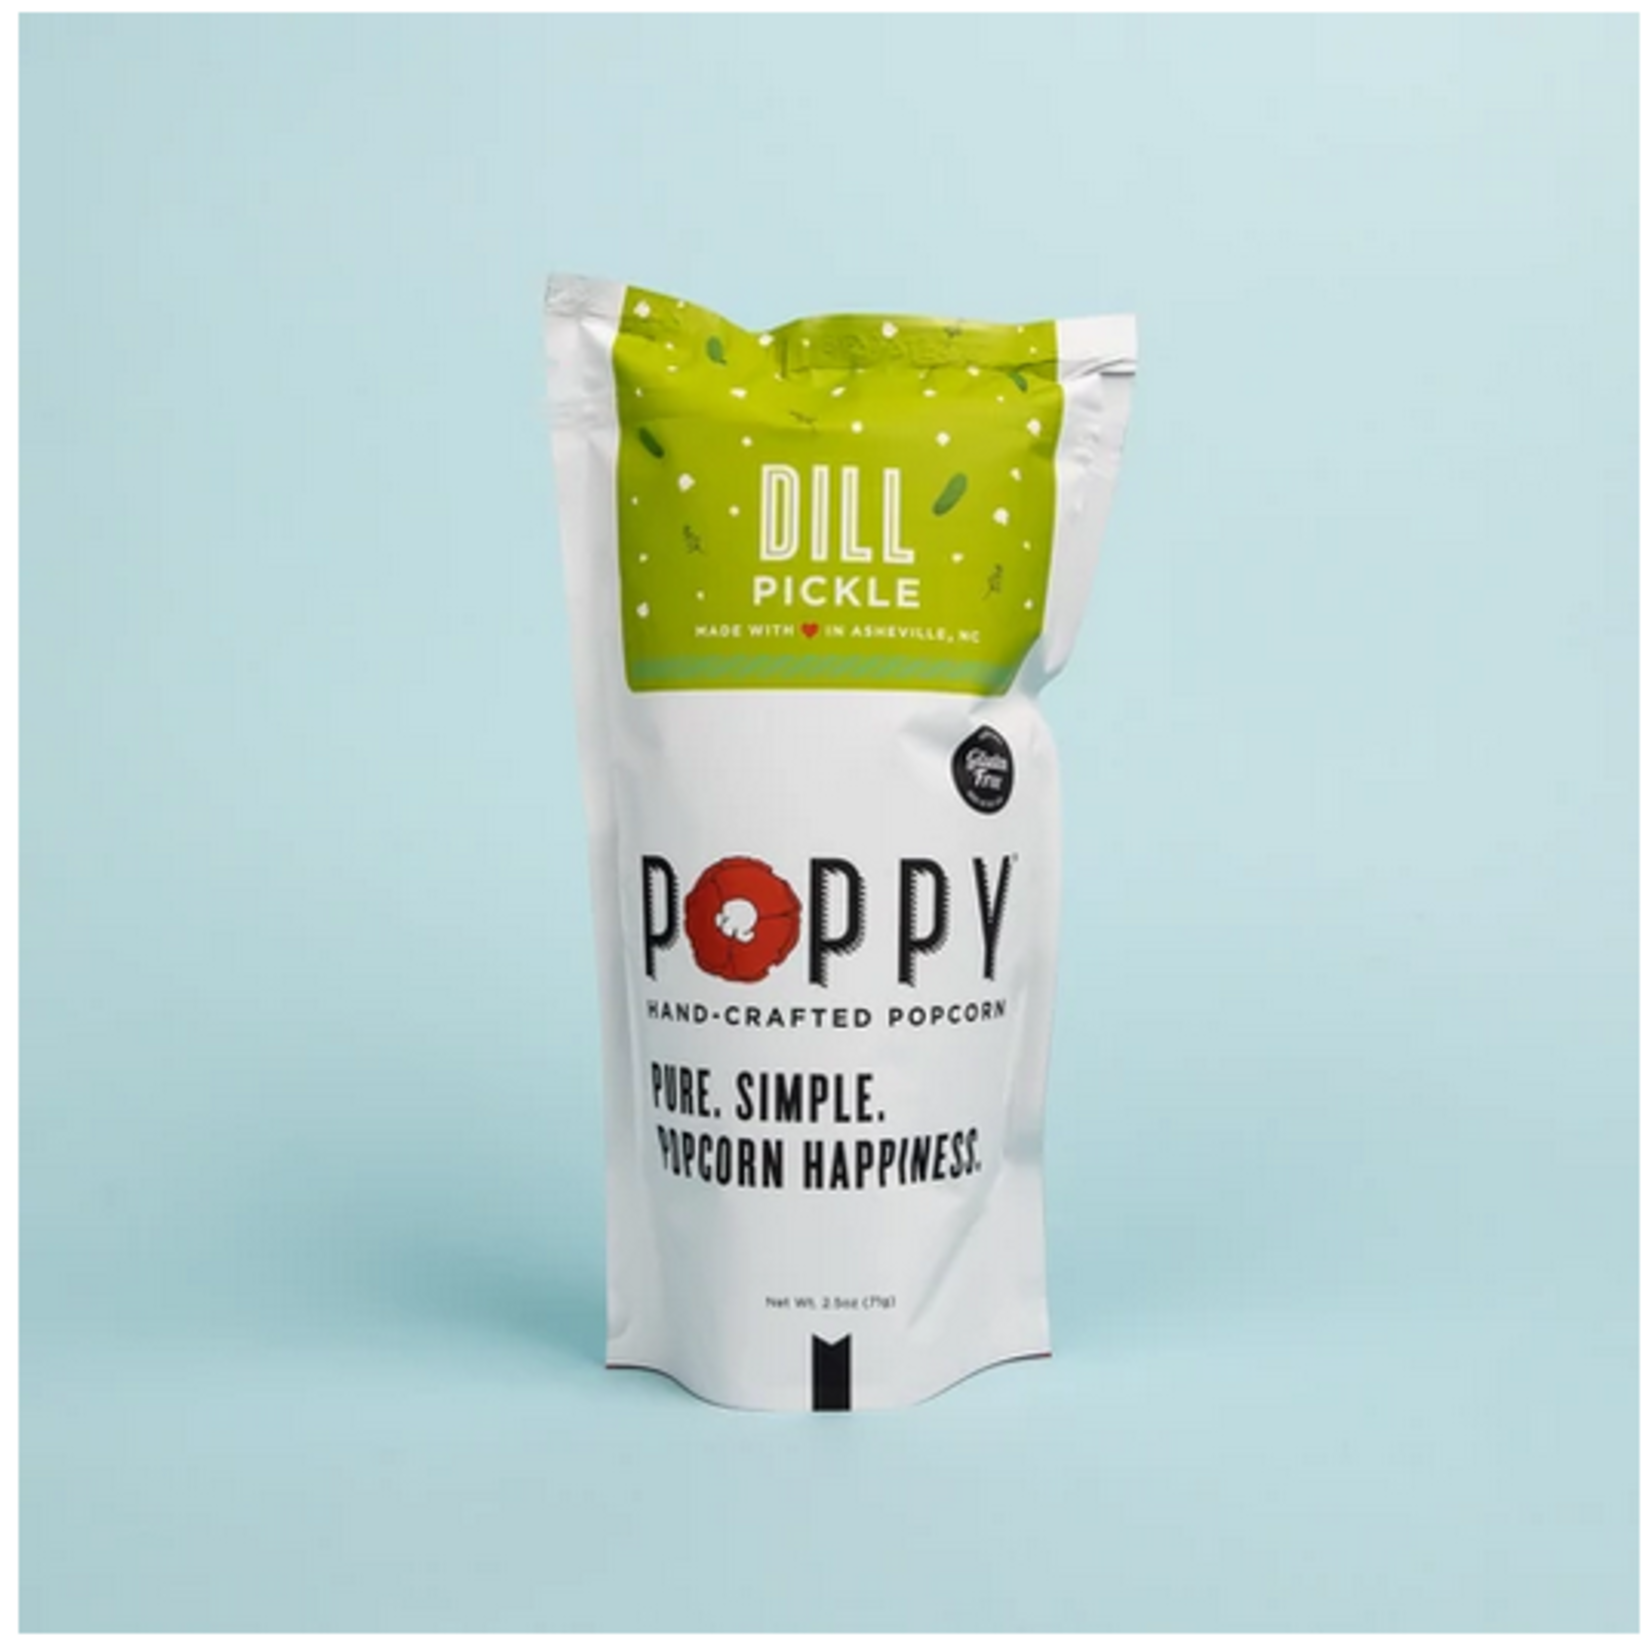 Poppy Poppy Popcorn - Dill Pickle